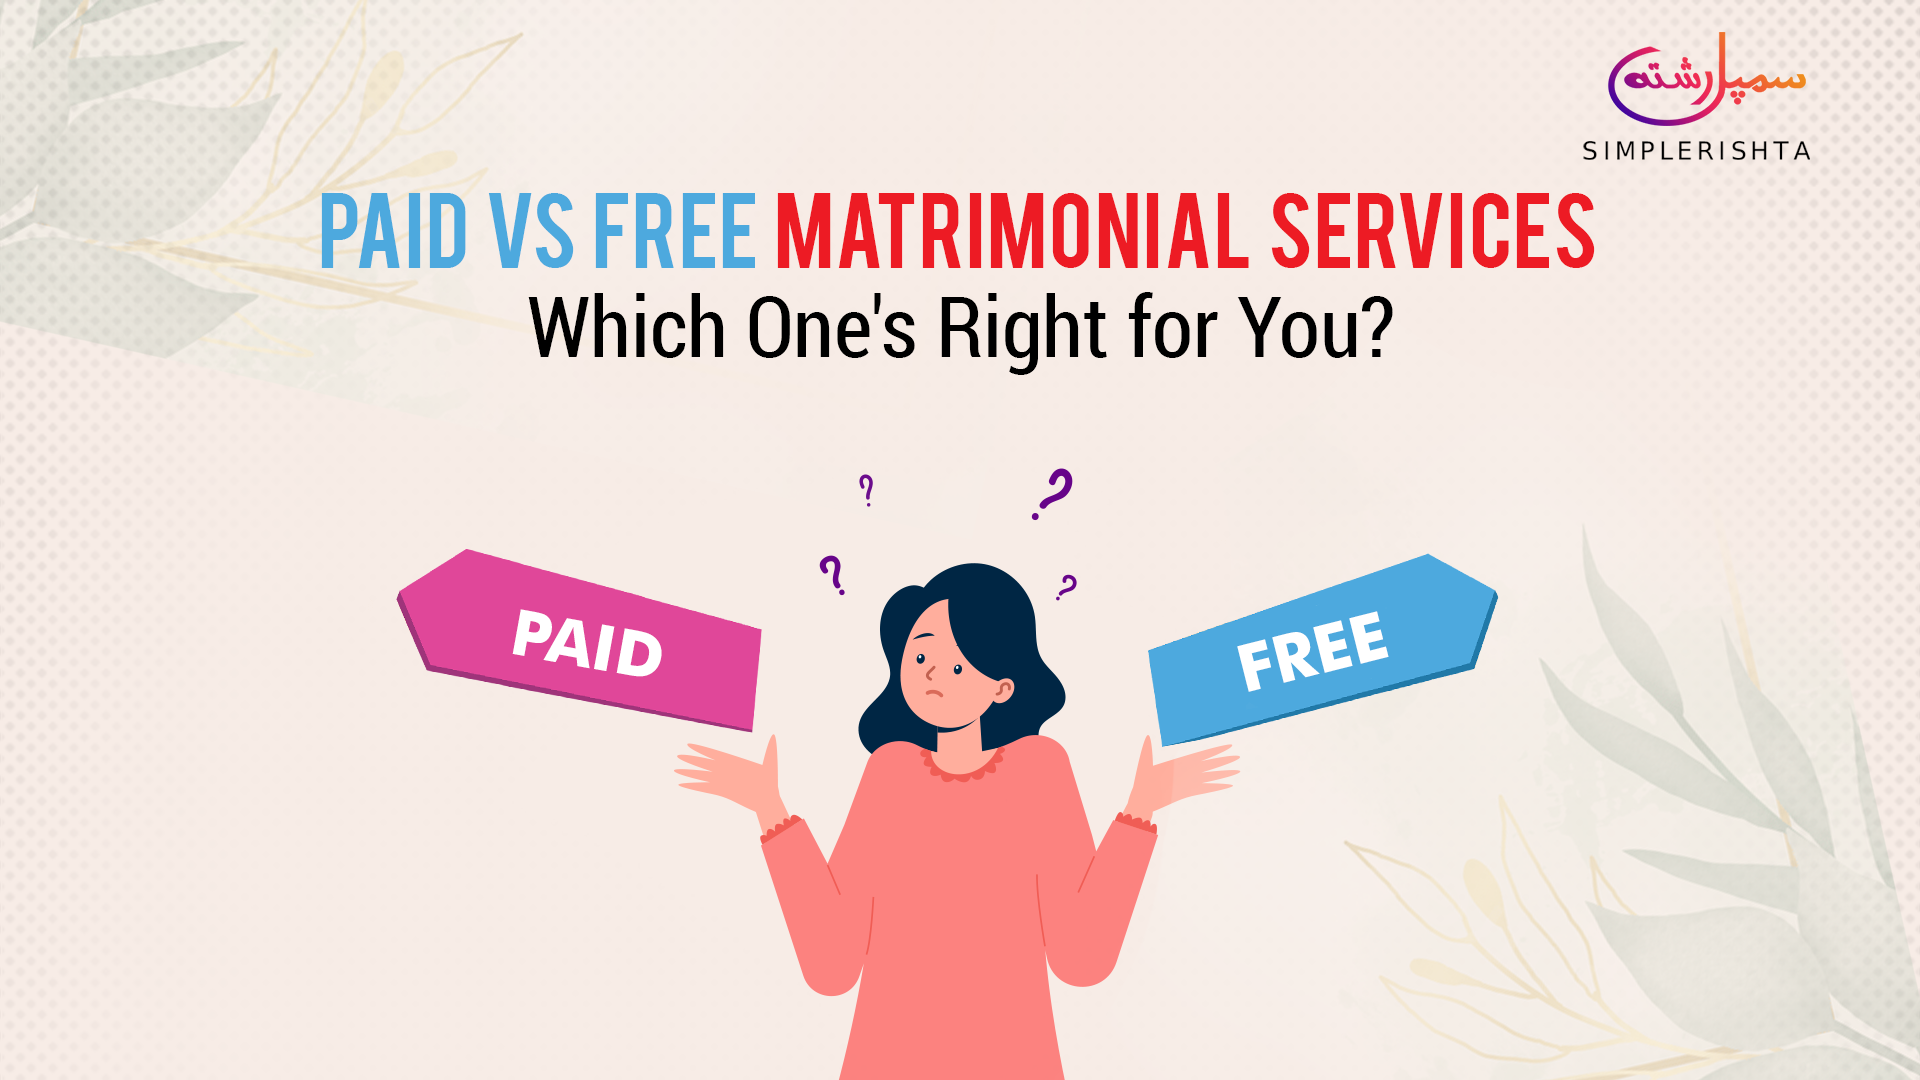 Free Matrimonial Services Vs. Paid